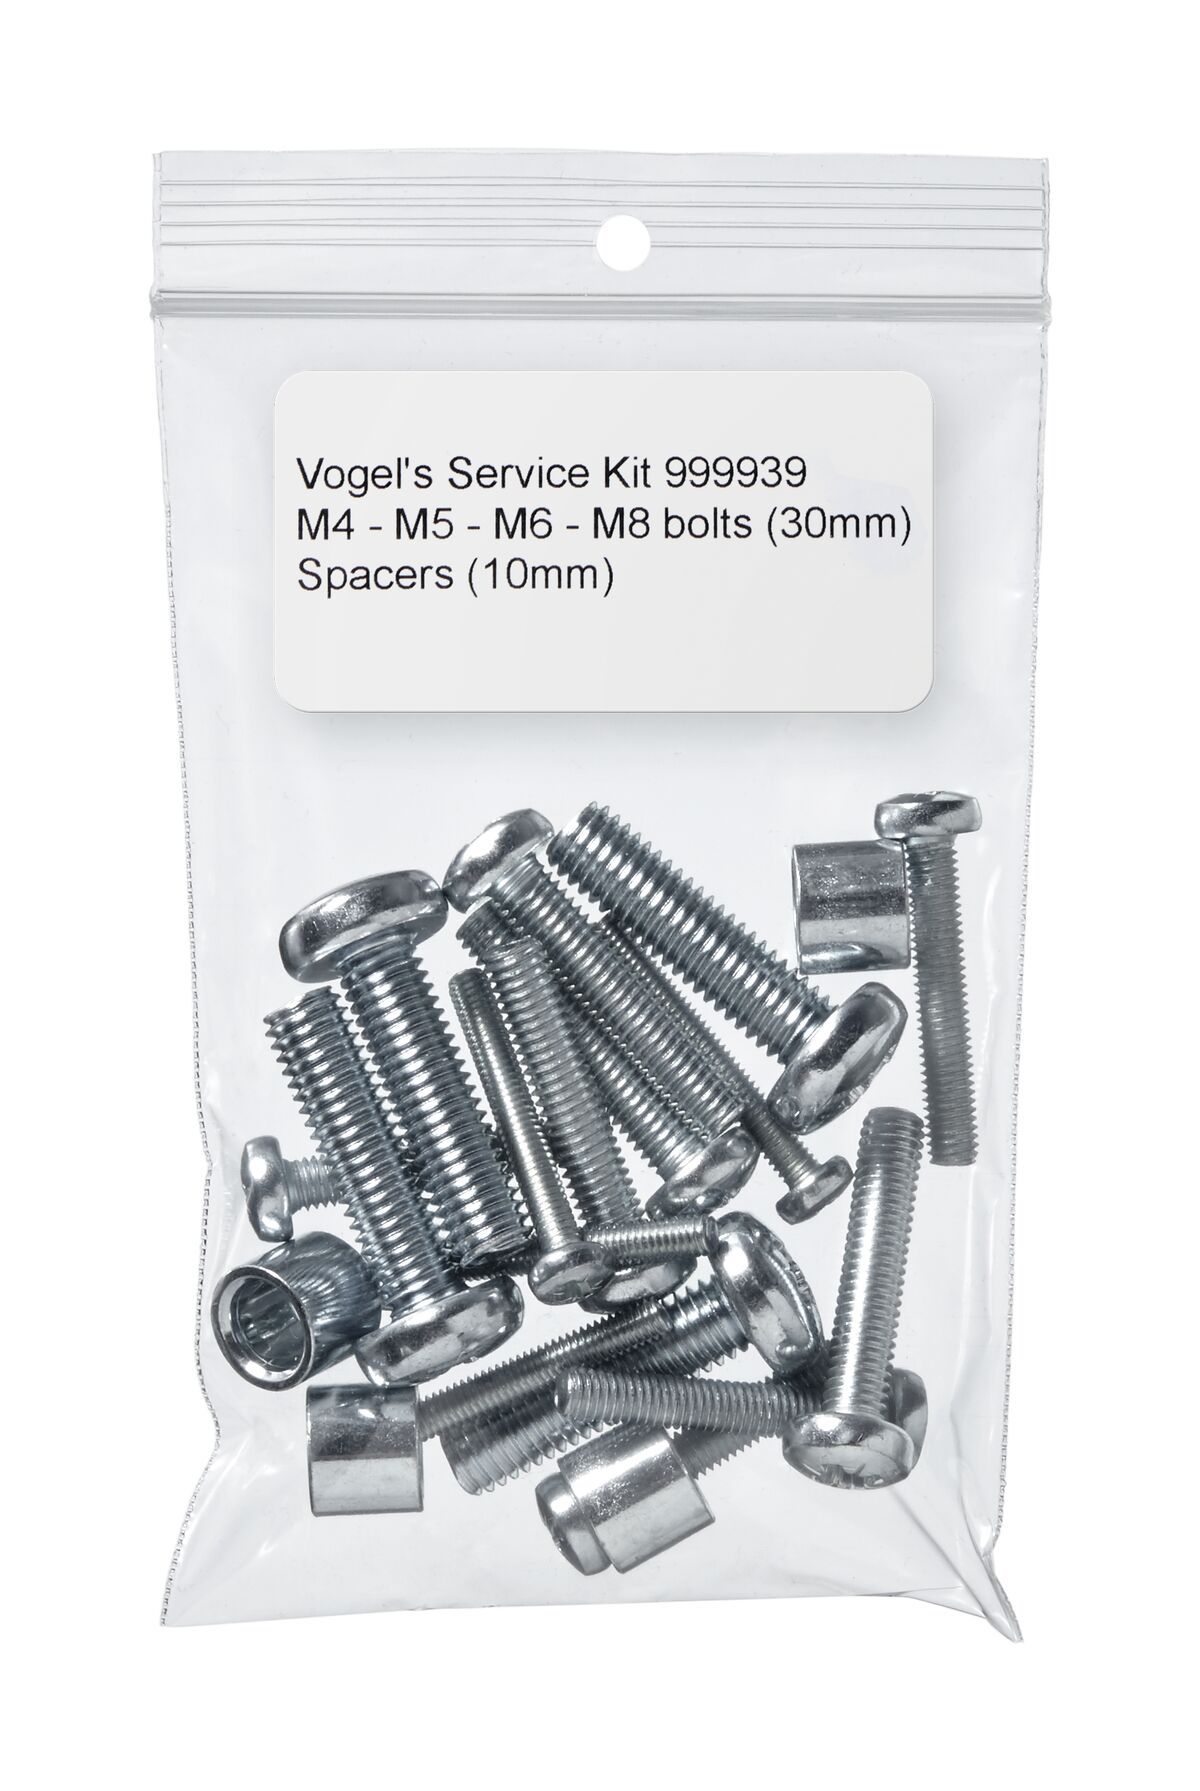 Vogel's Service Kit - Spacers (10 mm), M4-M5-M6-M8 bolts (30 mm) - Product